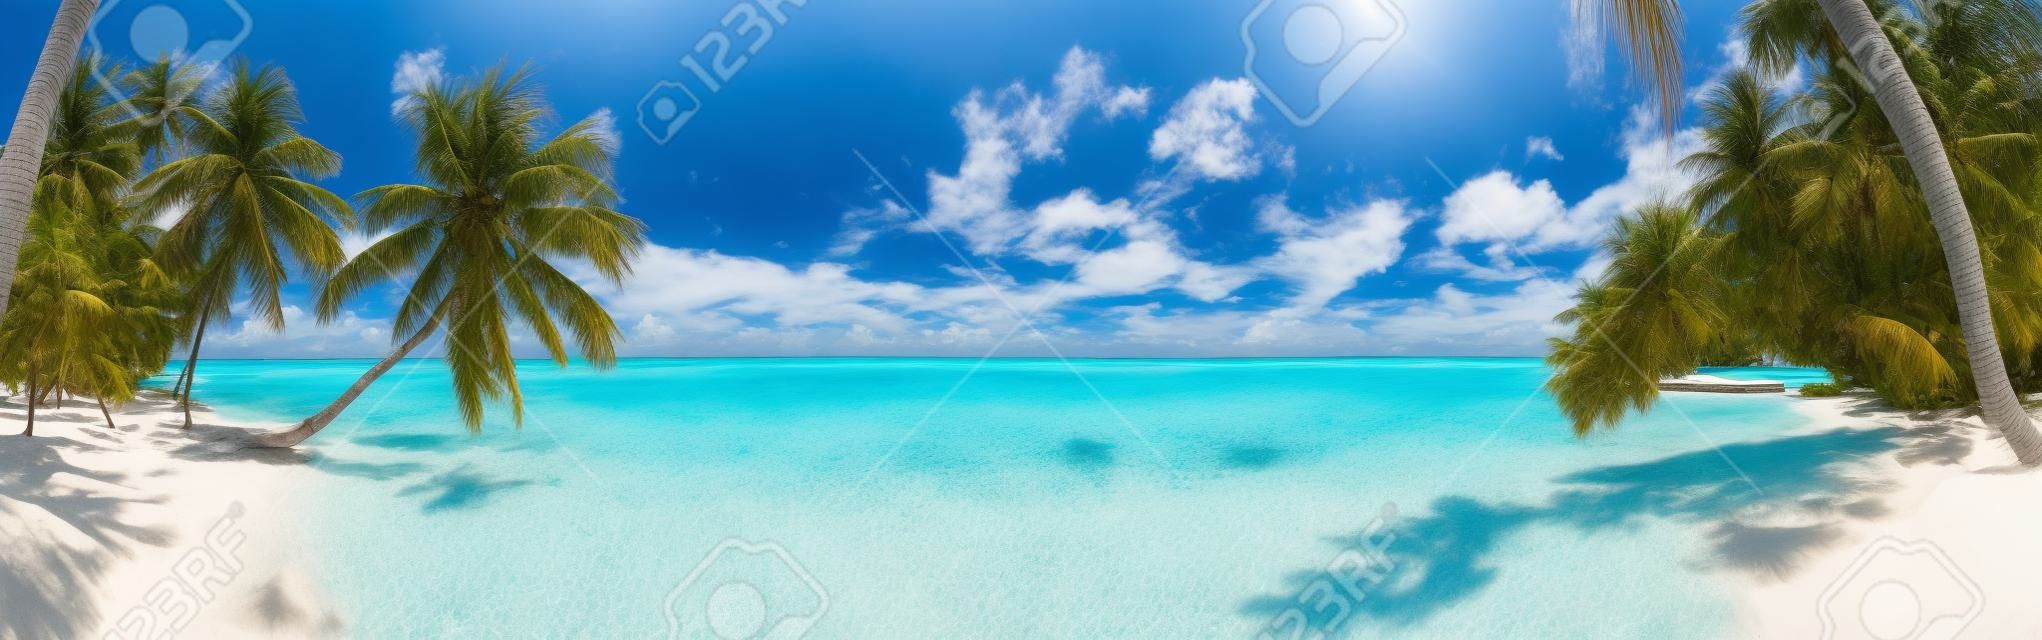 Strand panorama op Malediven met blauwe lucht, palmbomen en turquoise water